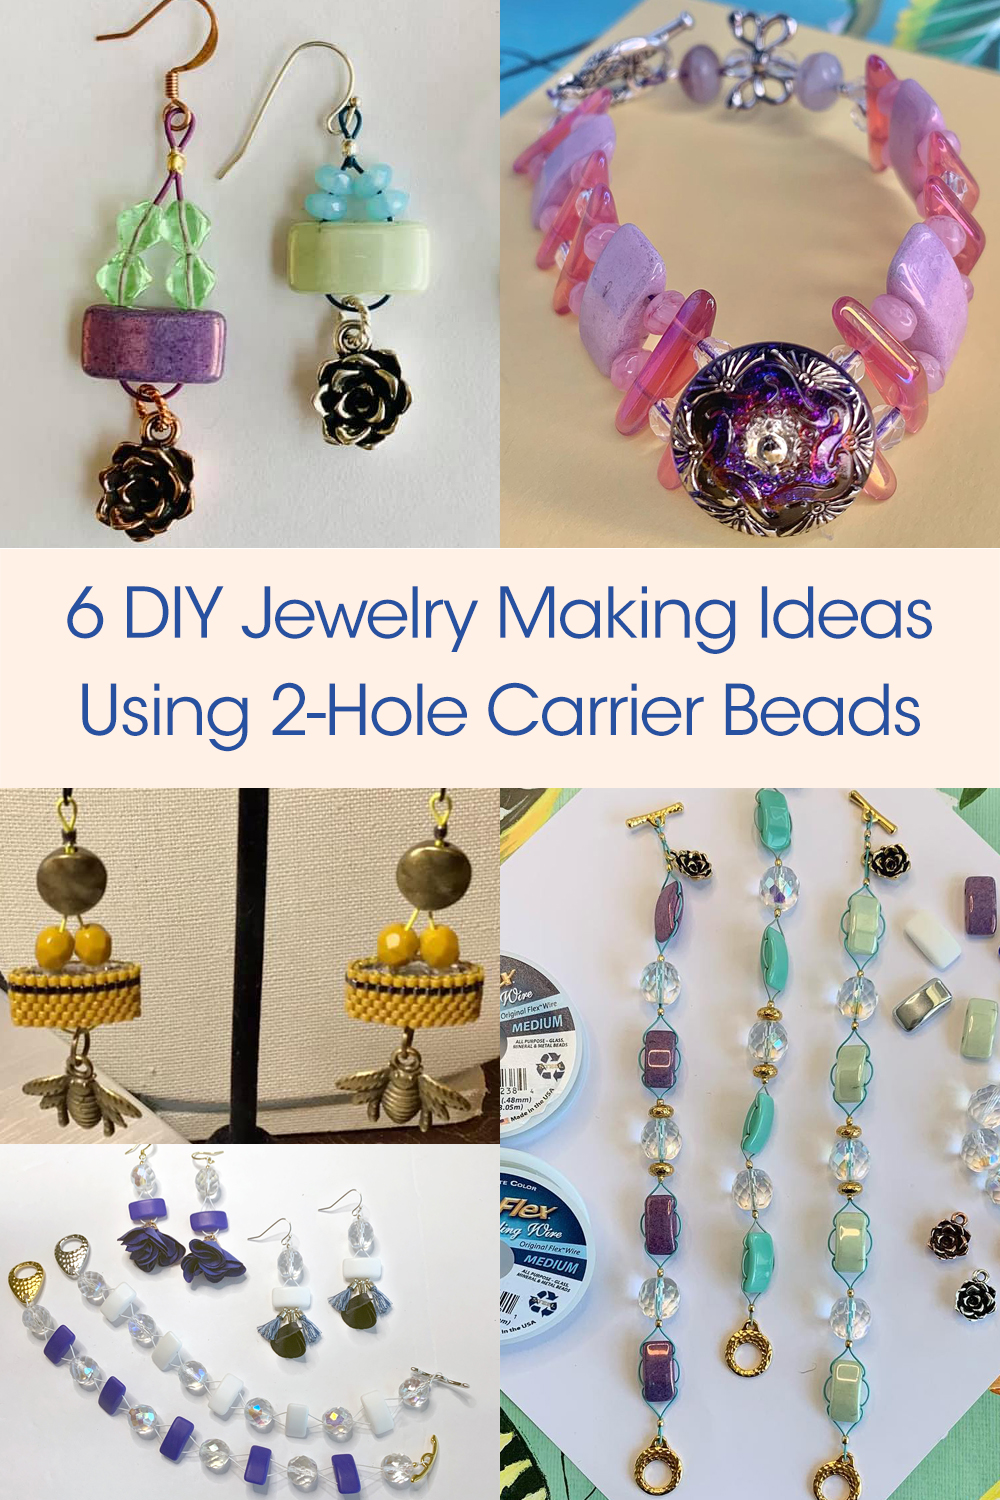 Beads in Beading & Jewelry Making